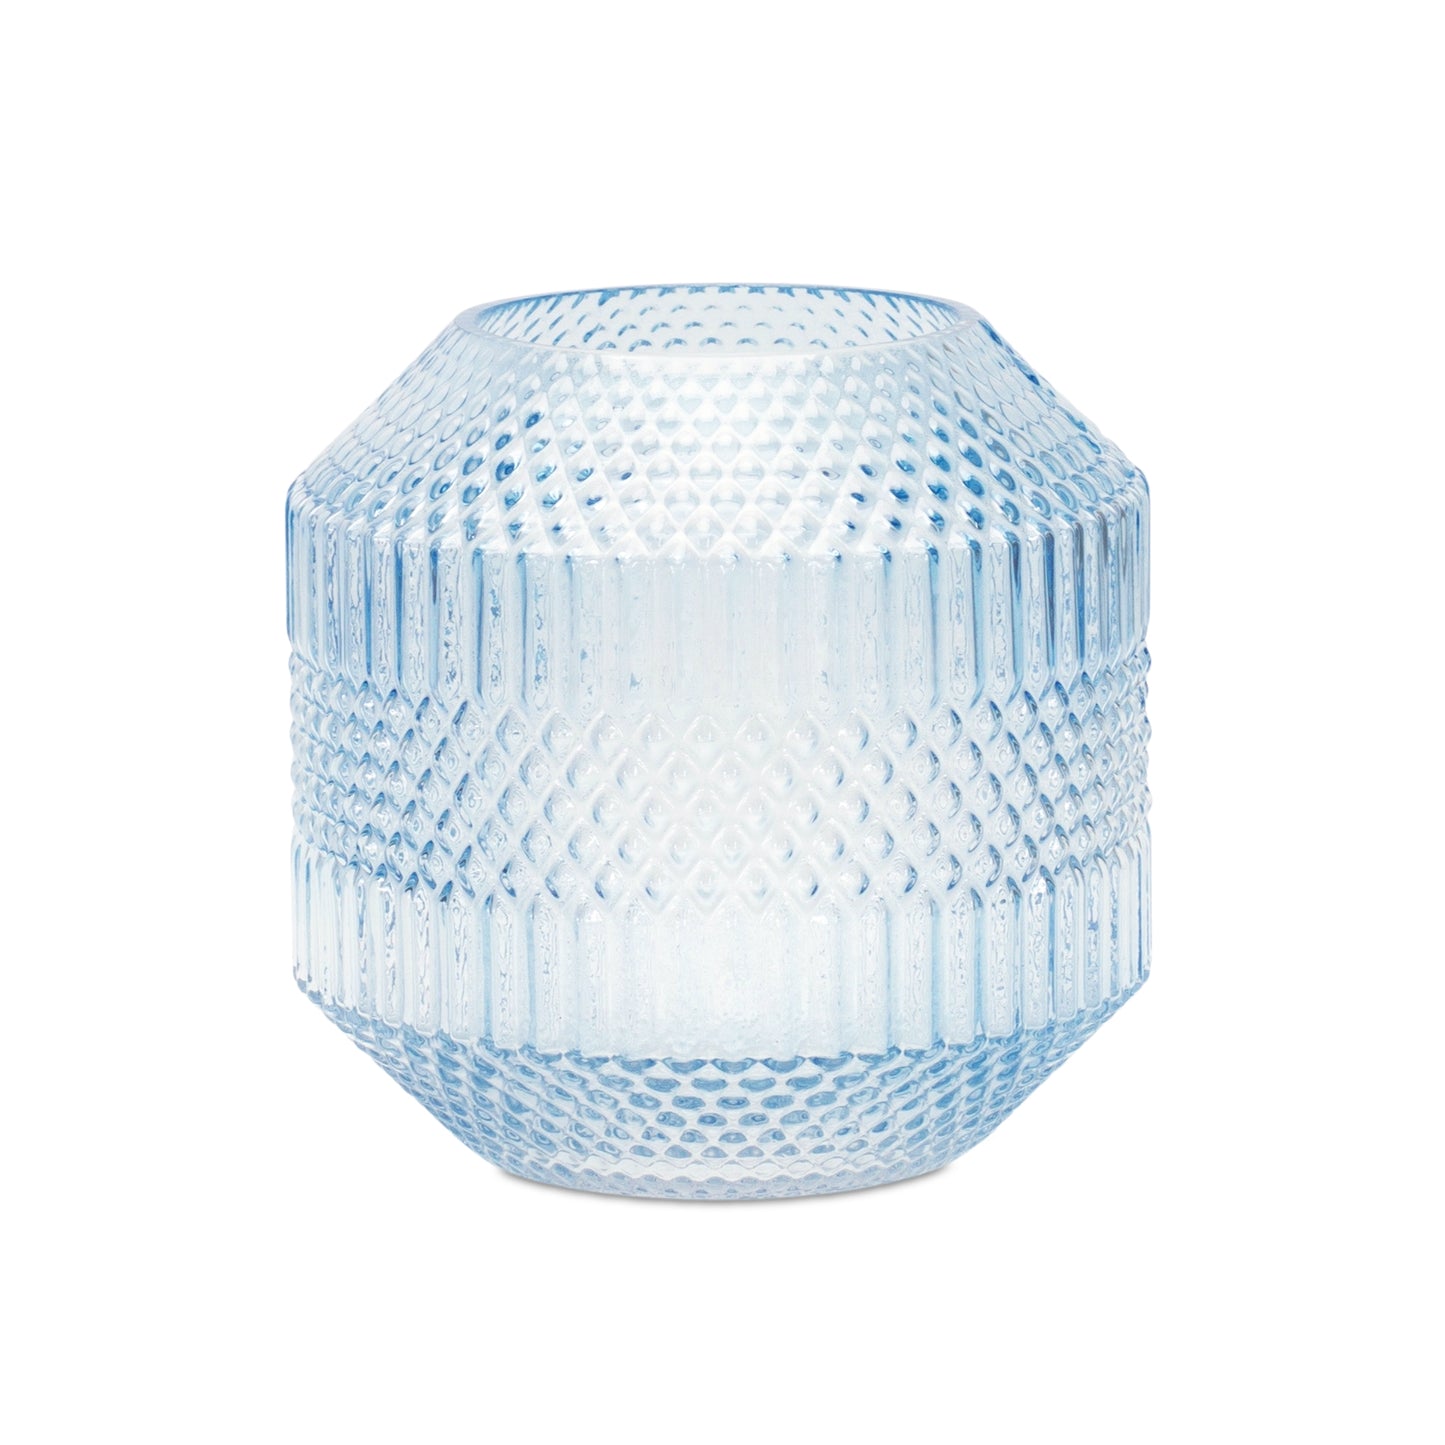 Diamond Pattern Blue Glass Vase or Candle Holder 6.5"H